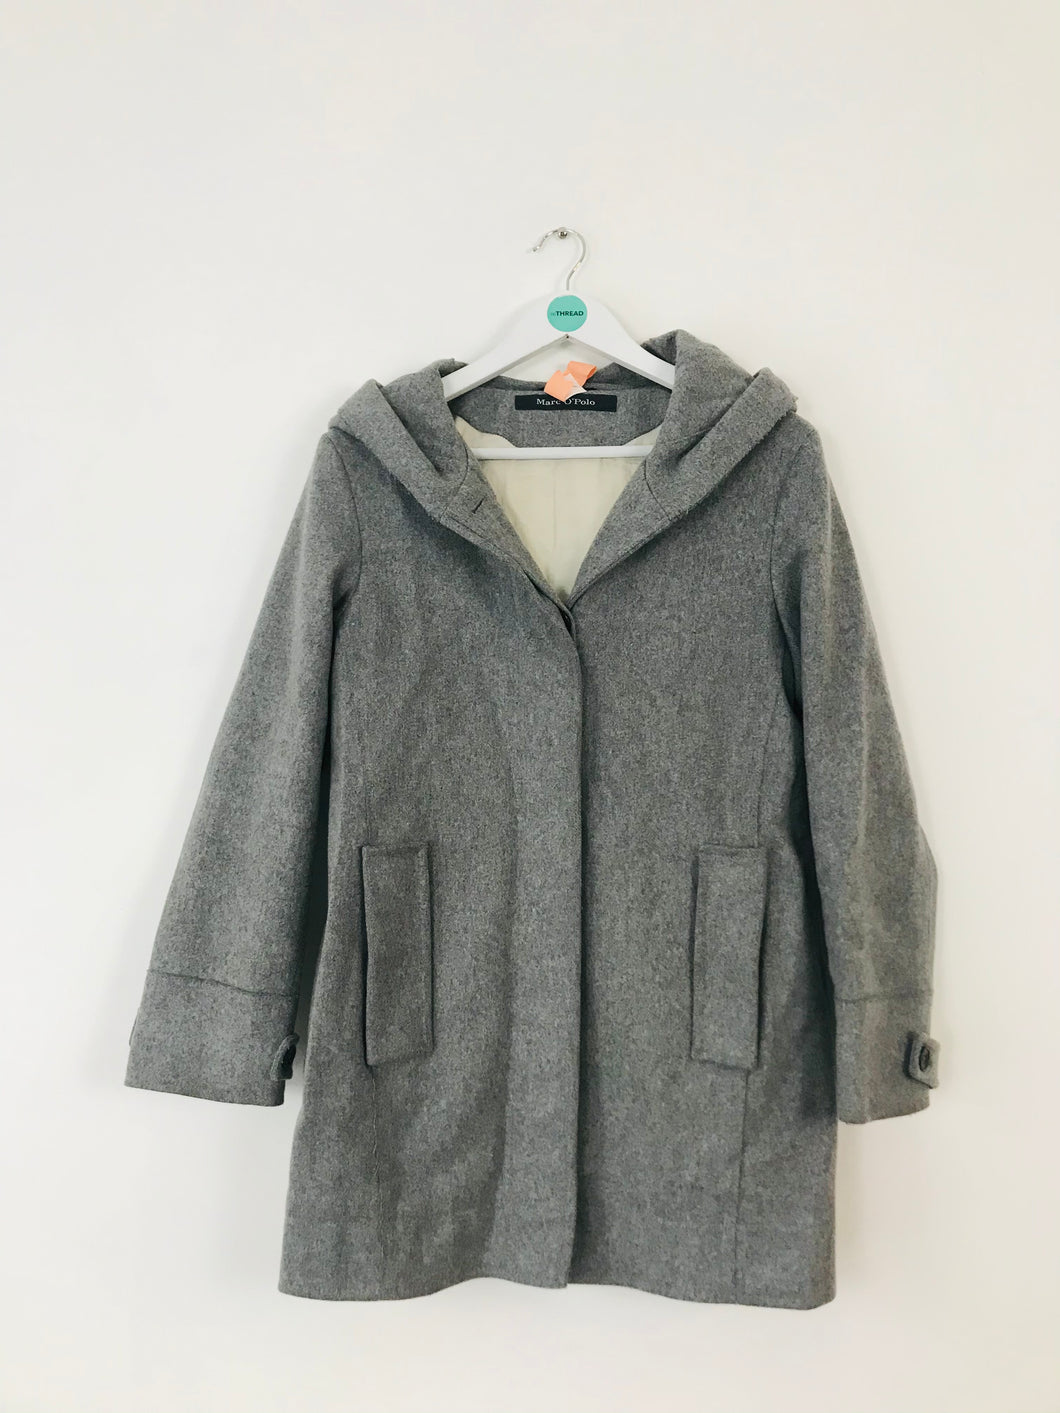 Marc O’Polo Women’s Wool Hooded Pea Coat | 34 UK6 | Grey